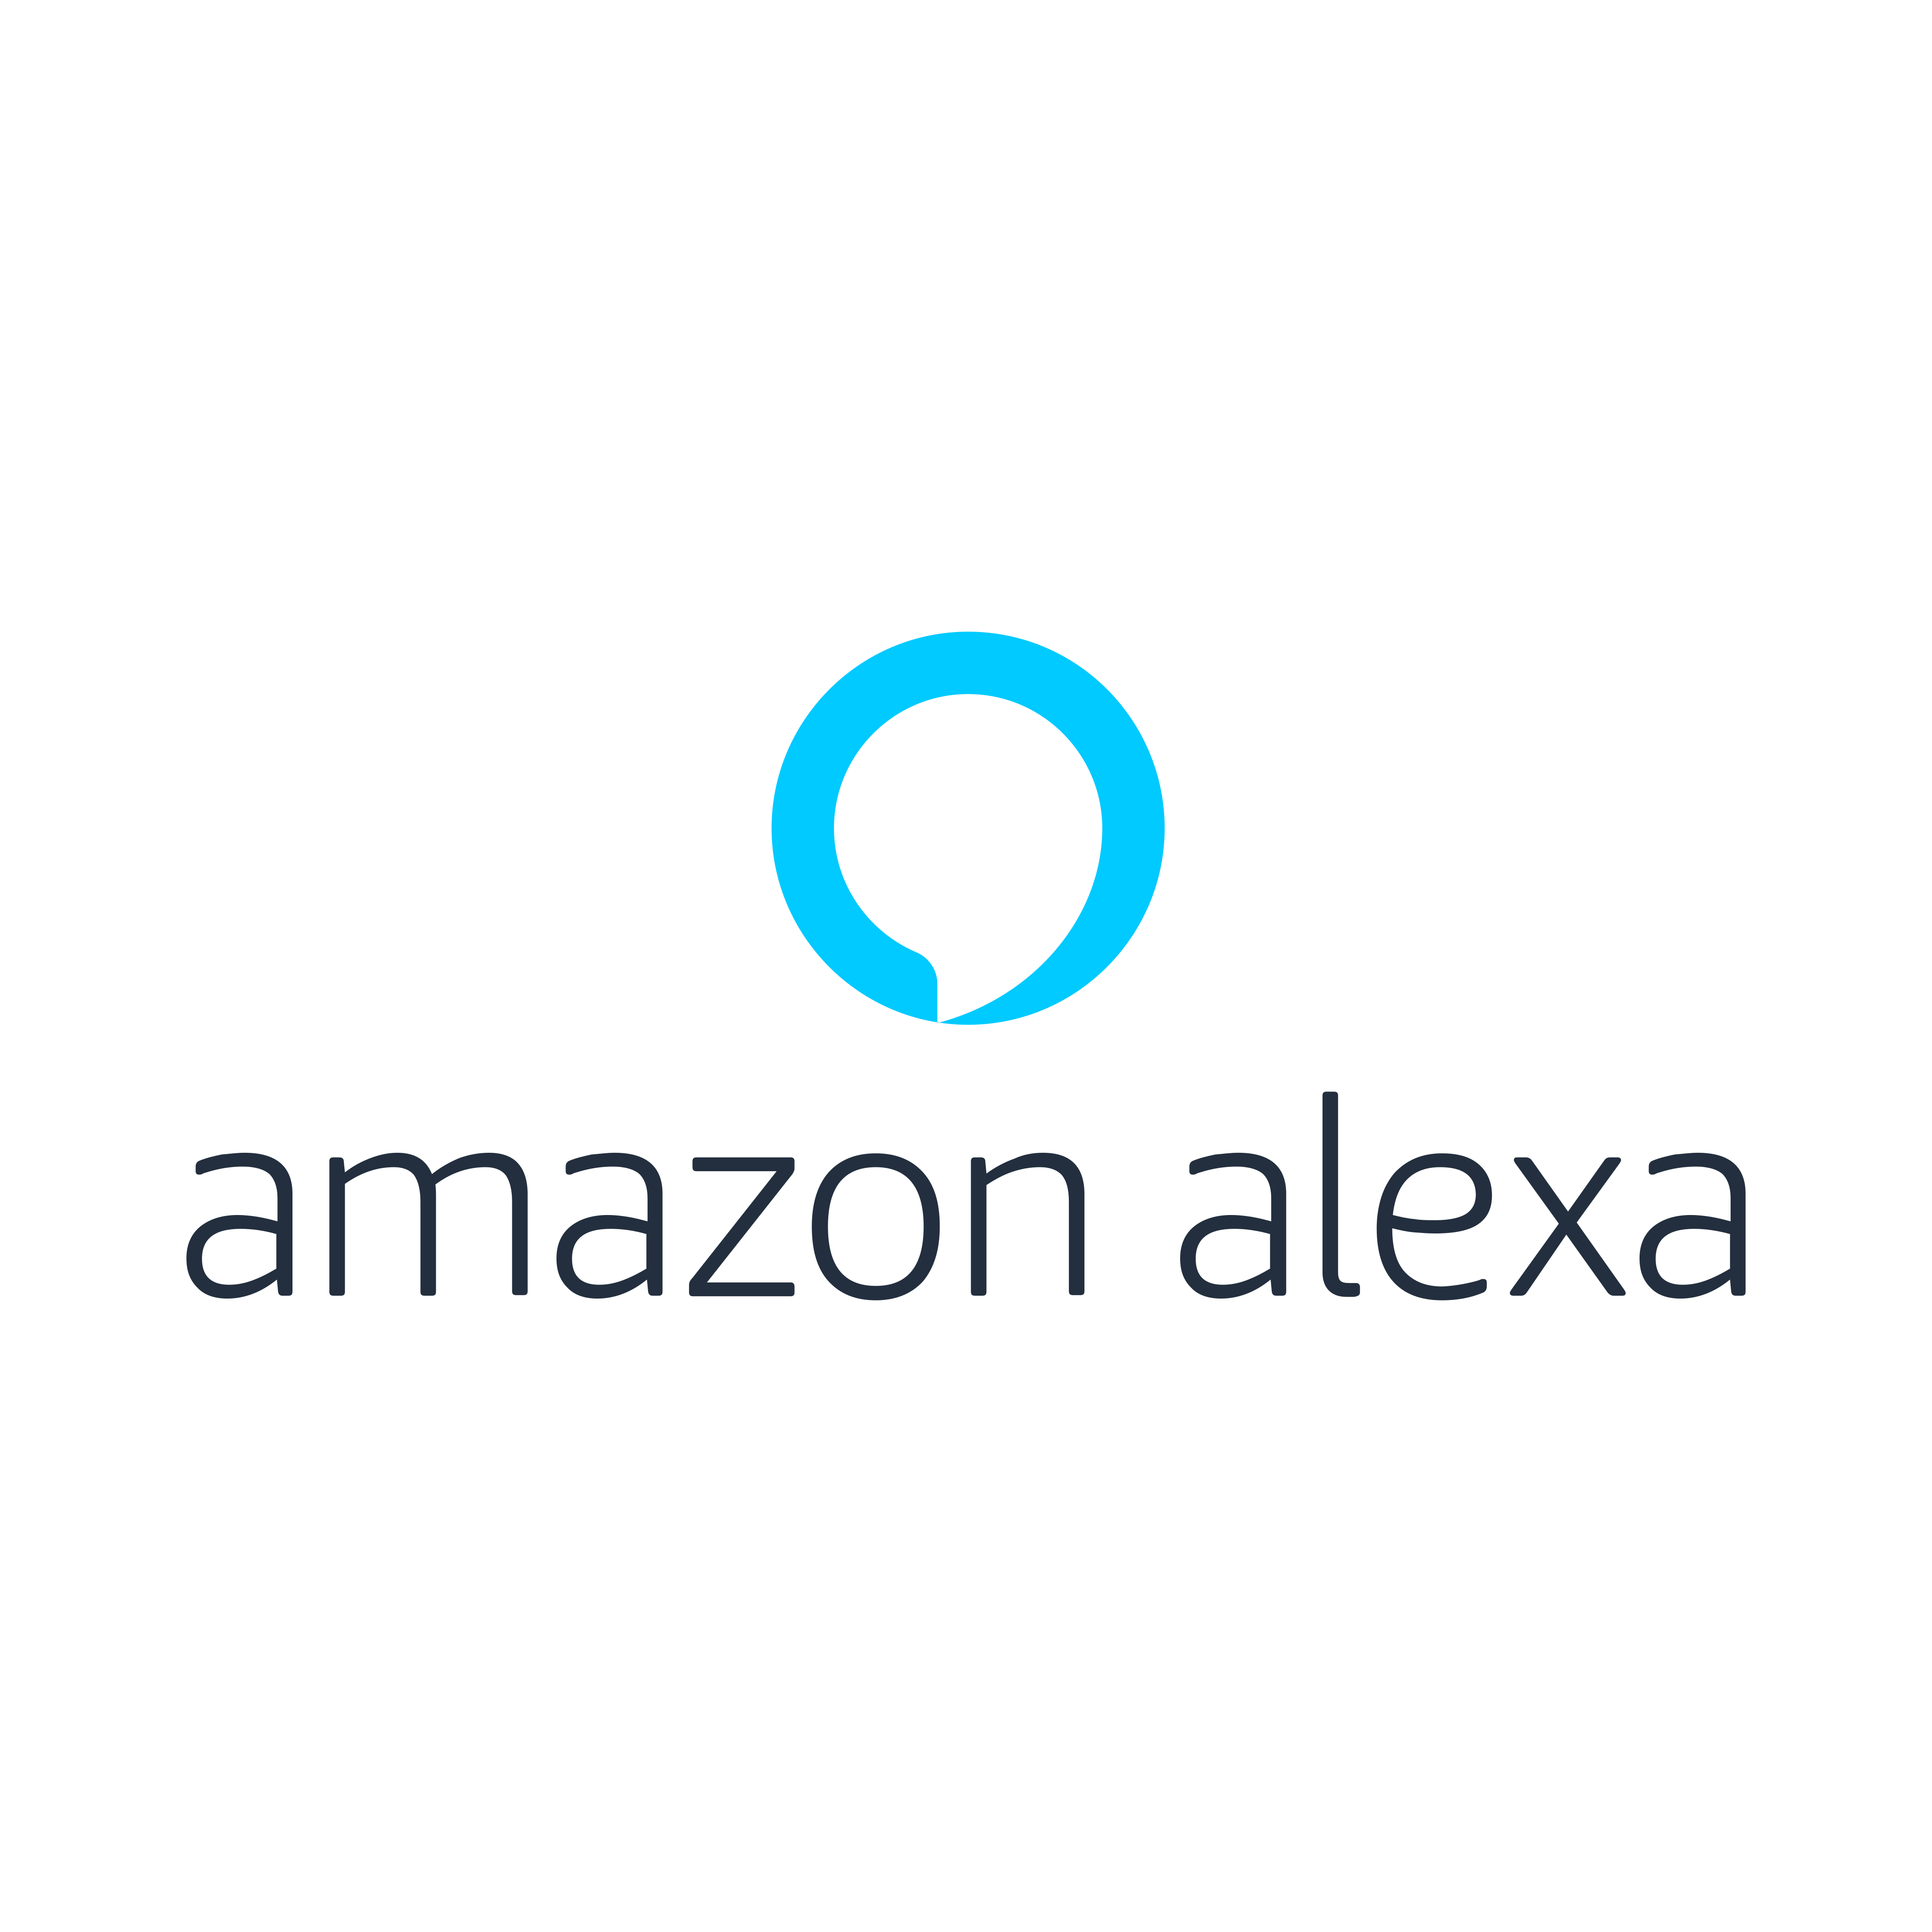 amazon-alexa-logo-0.png (180 KB)